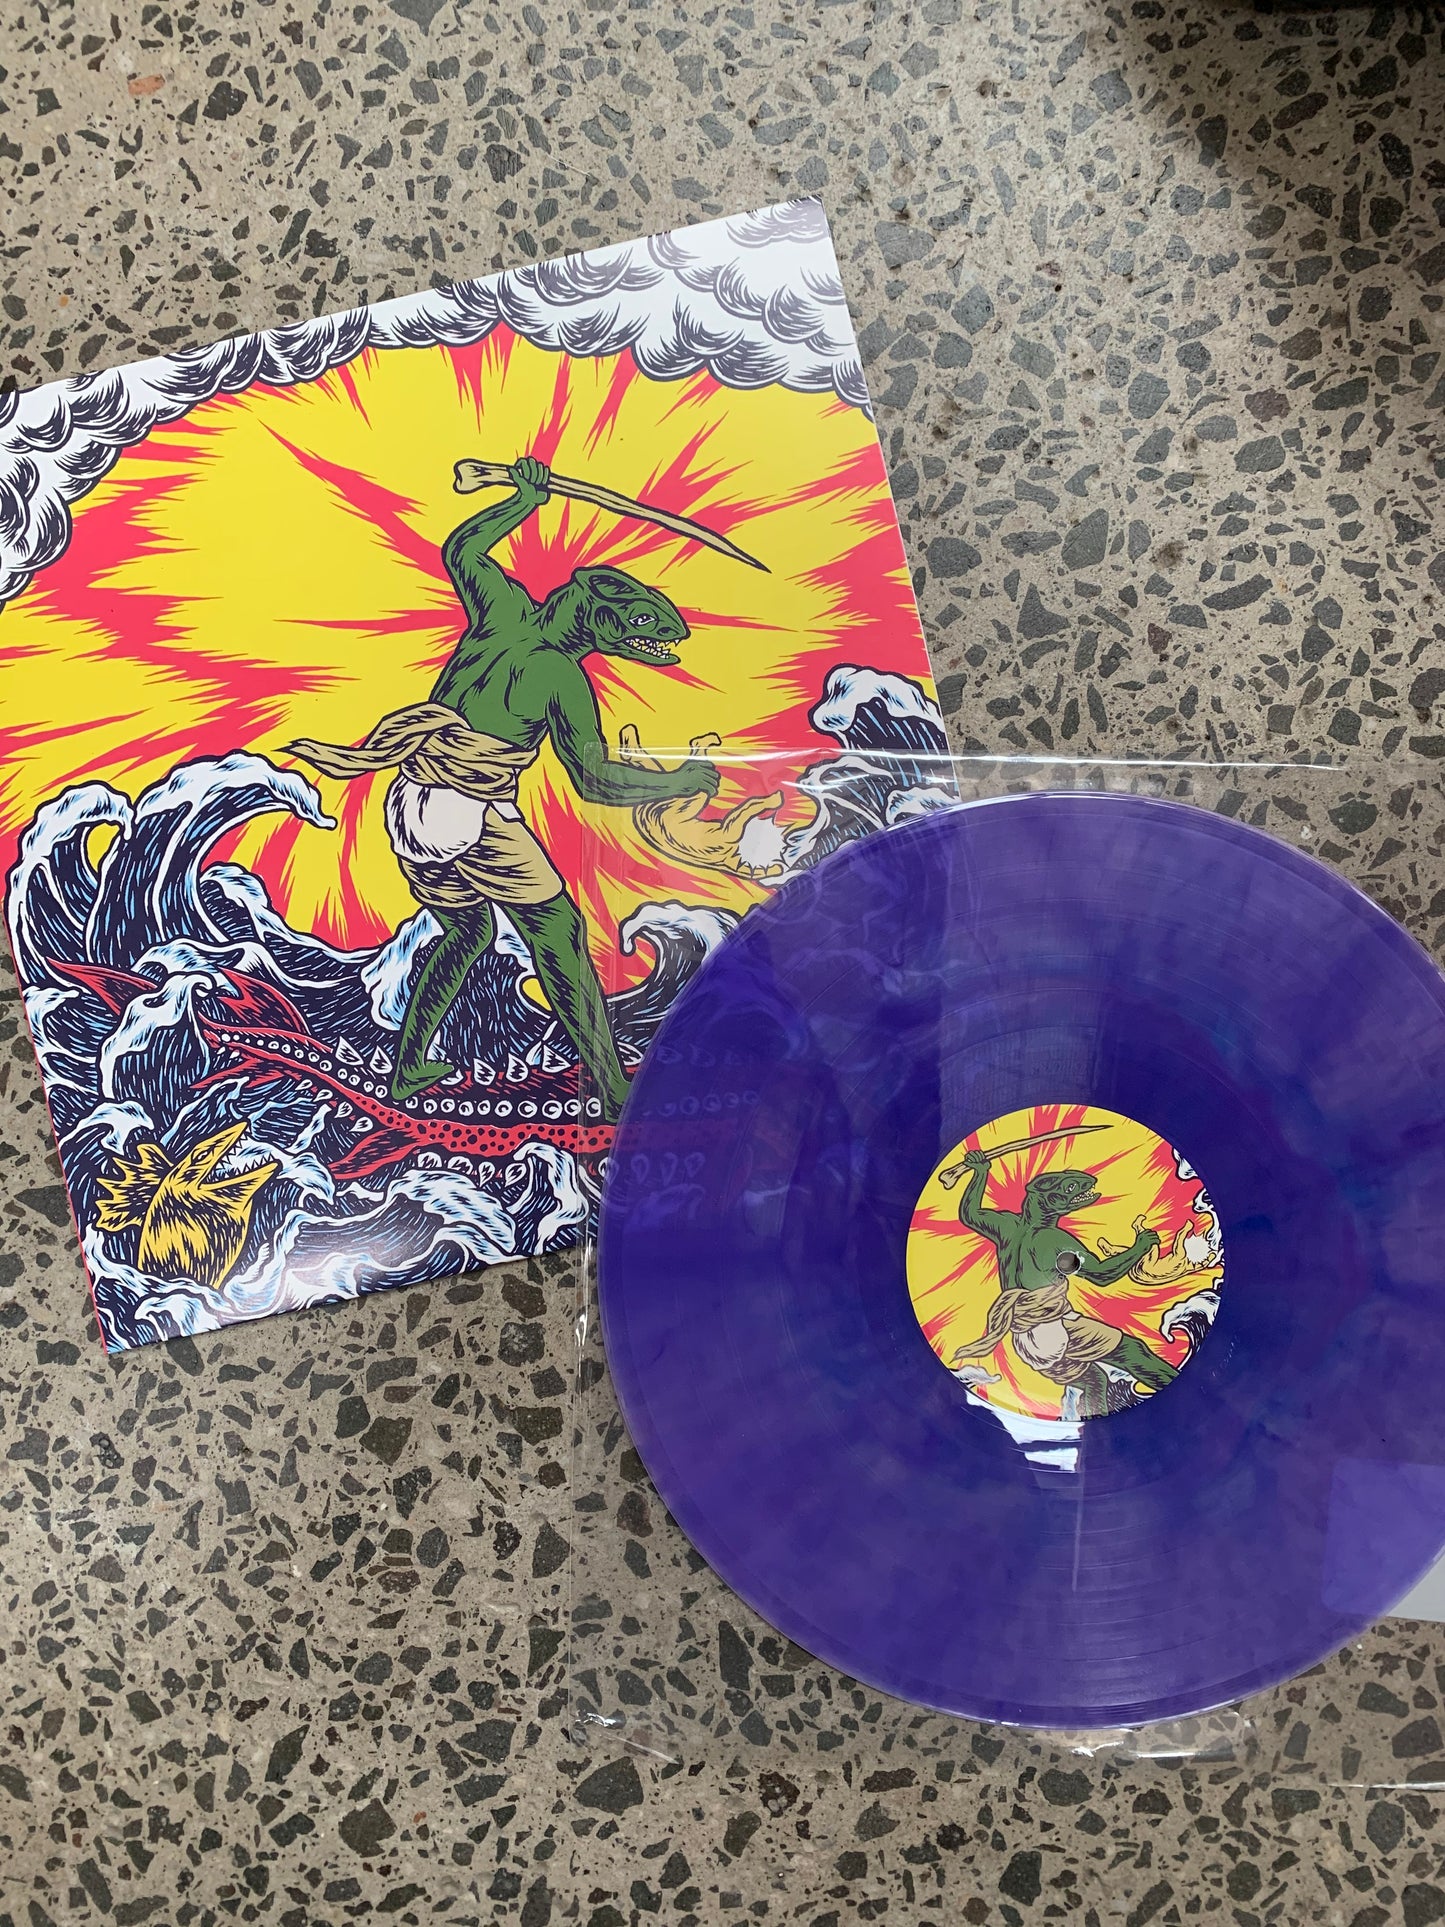 TEENAGE GIZZARD 12" Purple Vinyl (Bootleg by Magnetic South)